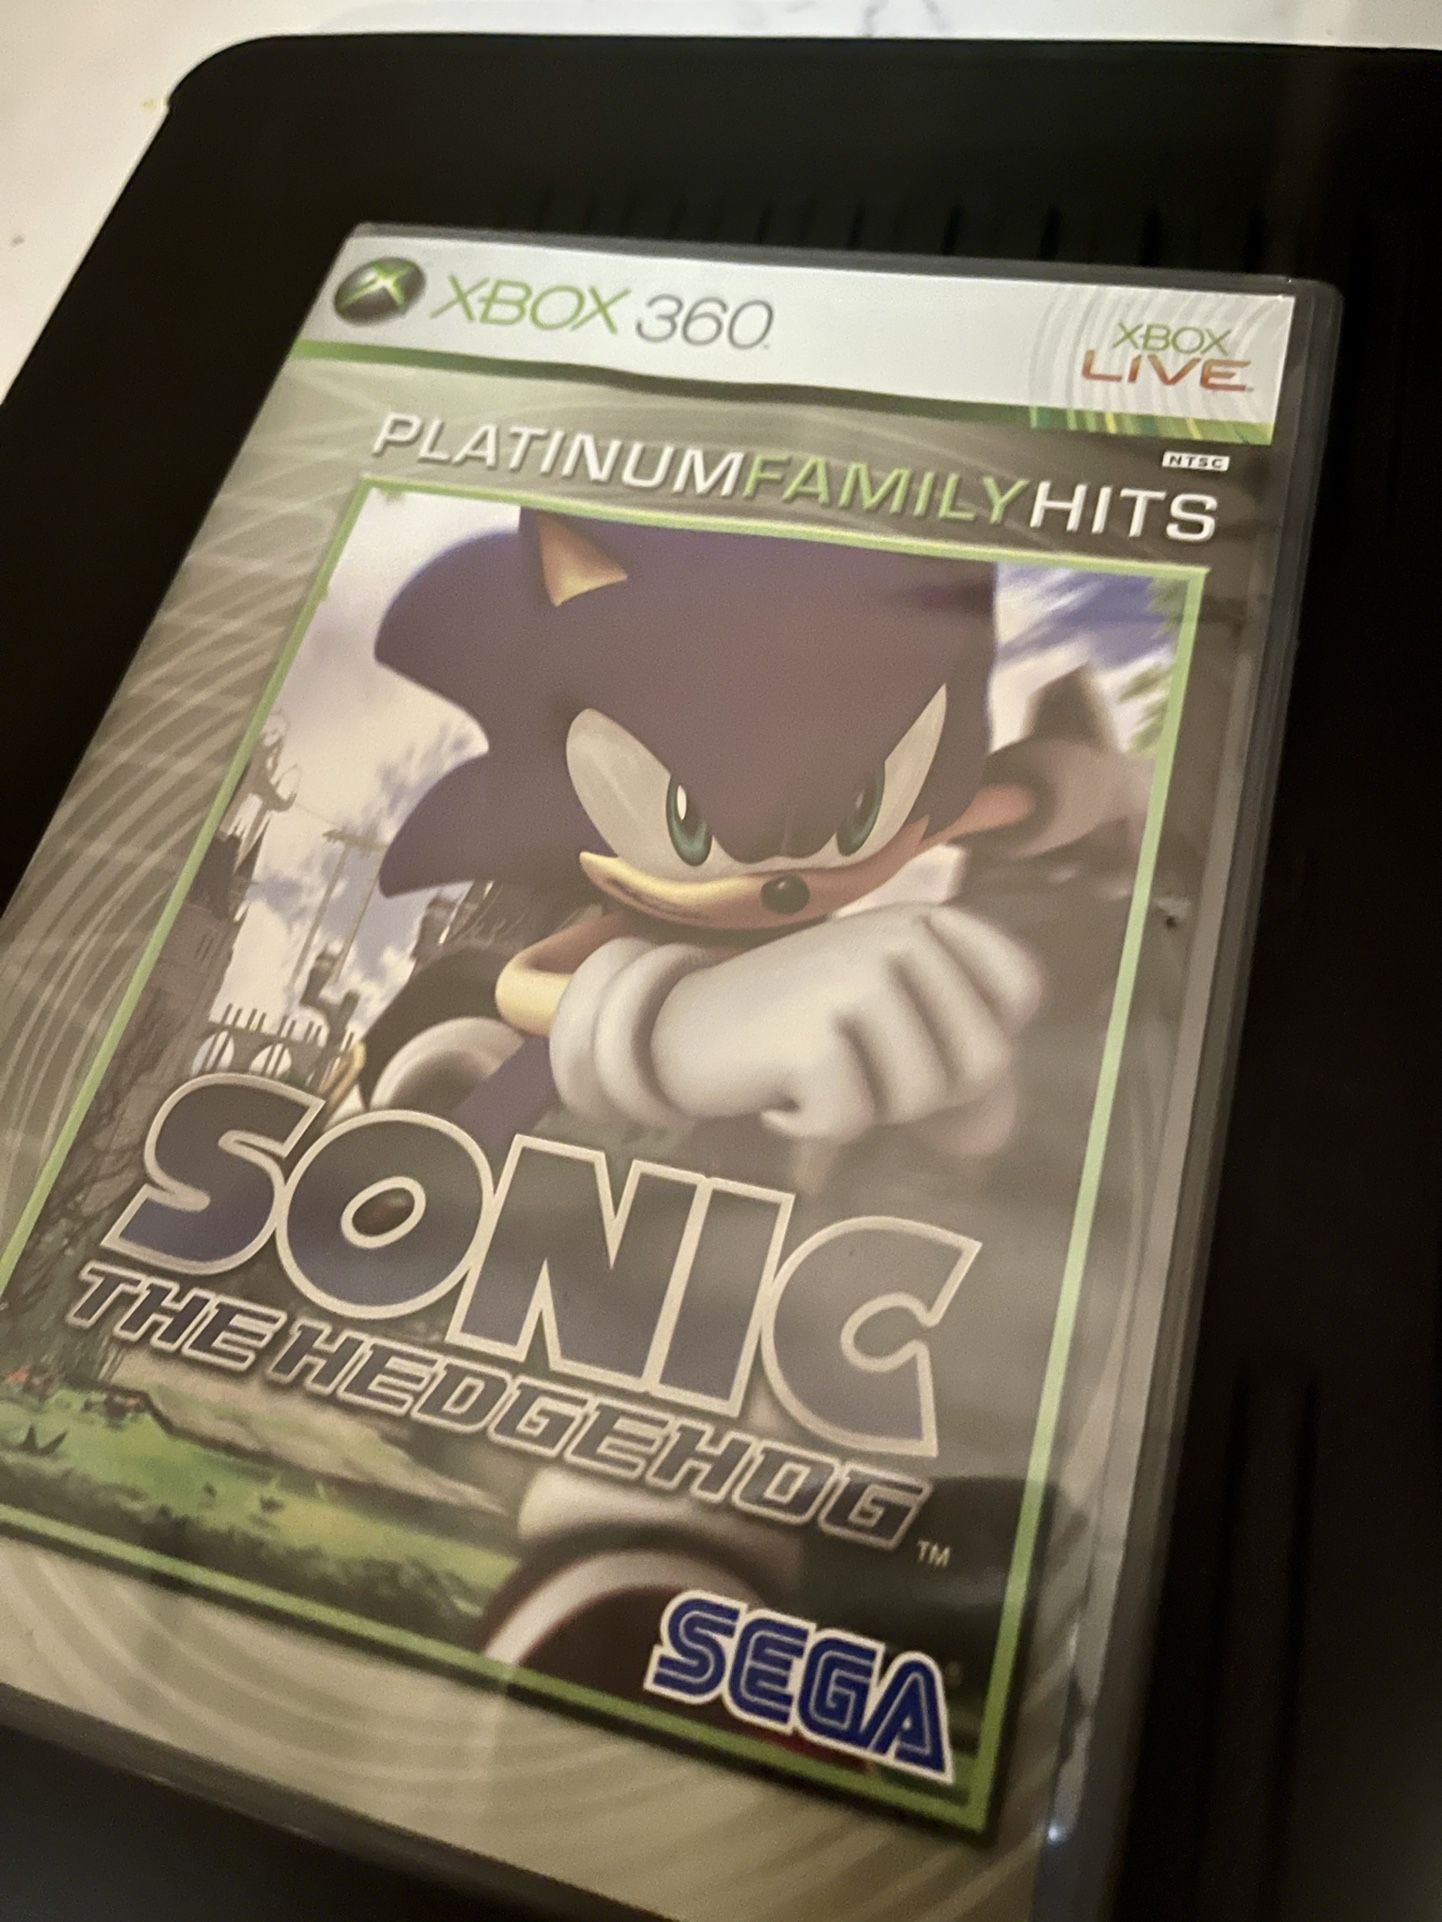 Sonic the Hedgehog - Xbox 360 